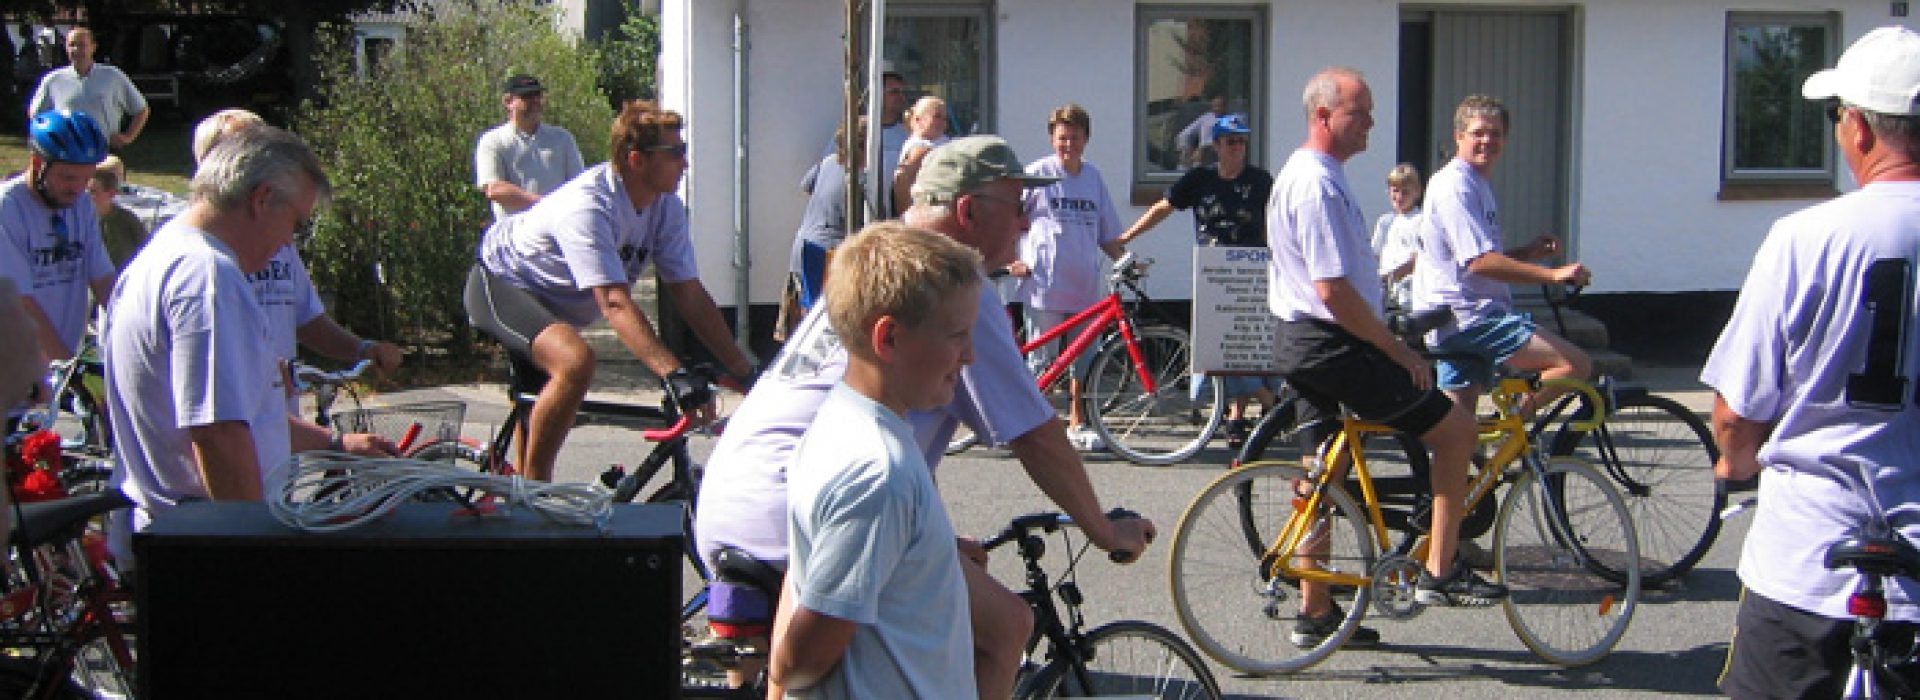 2003-08-16 CYKELSPONSORLØB (2)